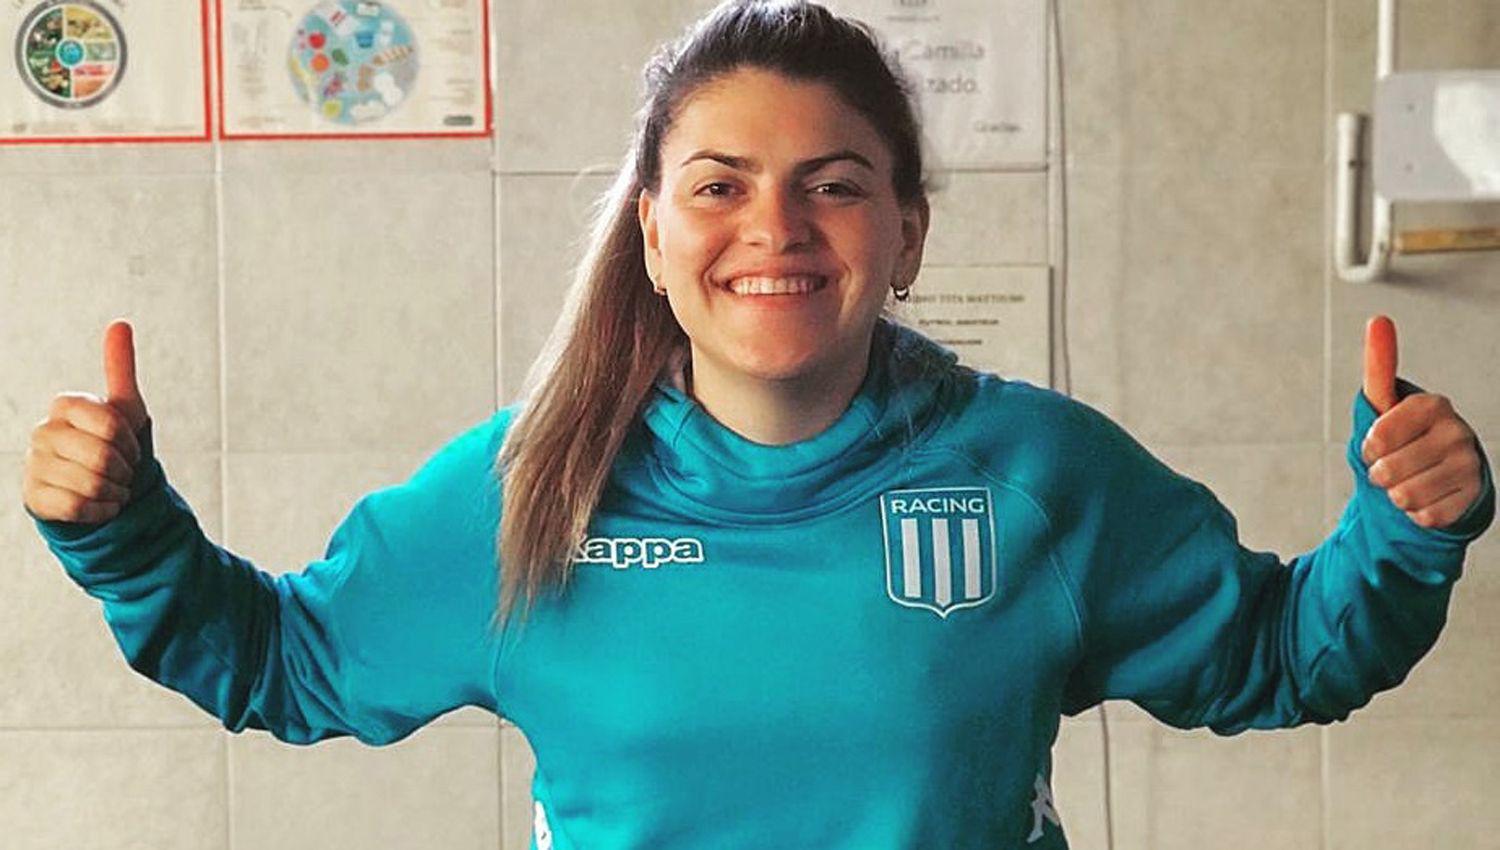 VIDEO  La goleadora santiaguentildea Beleacuten Spenig pasaraacute a jugar en el fuacutetbol de Espantildea